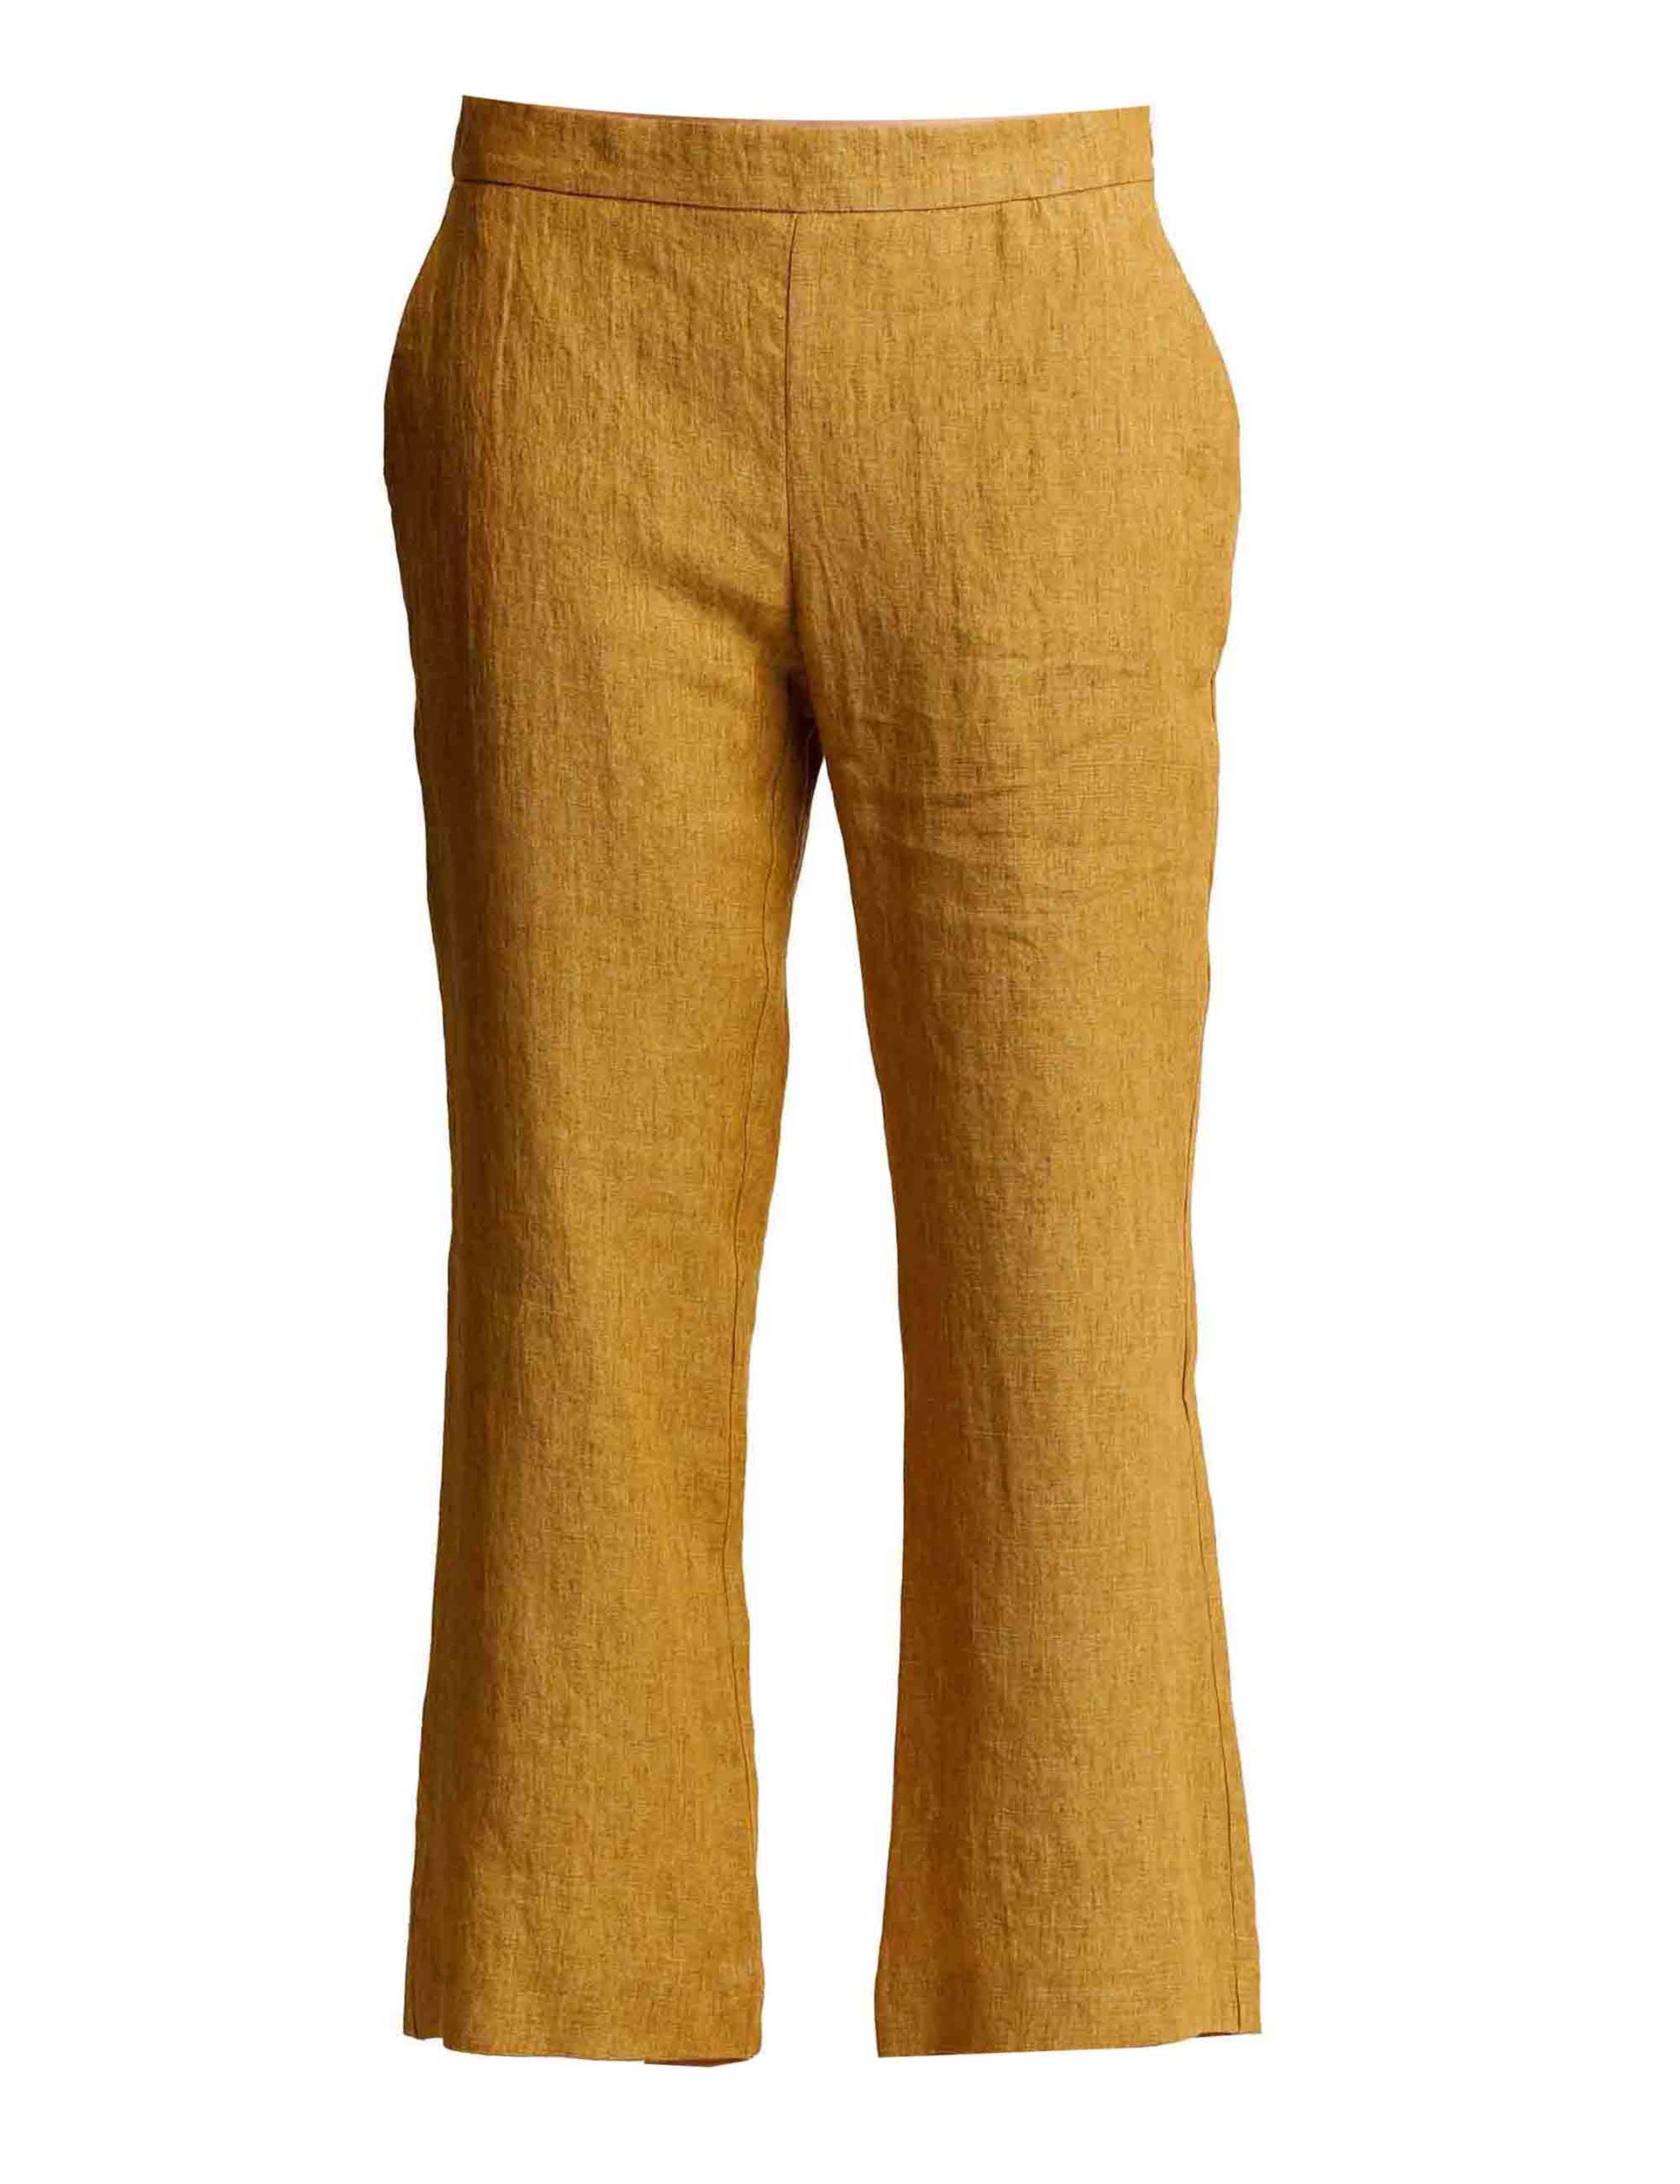 Délavé women's trousers in mustard pure linen